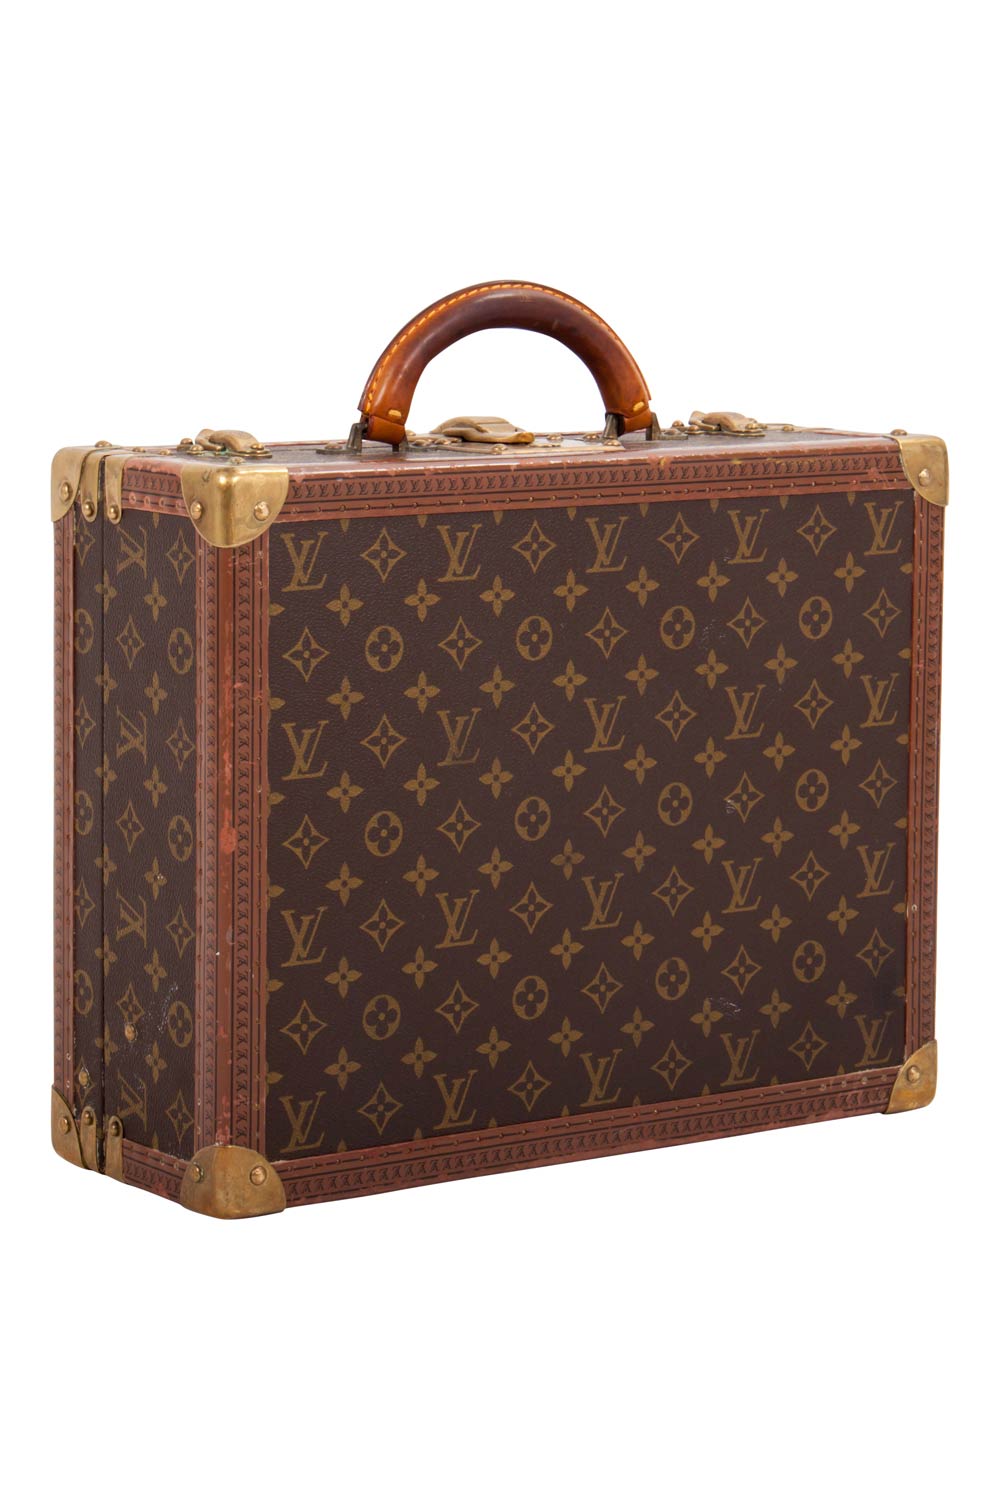 Louis Vuitton Luggage Carry On | Literacy Basics